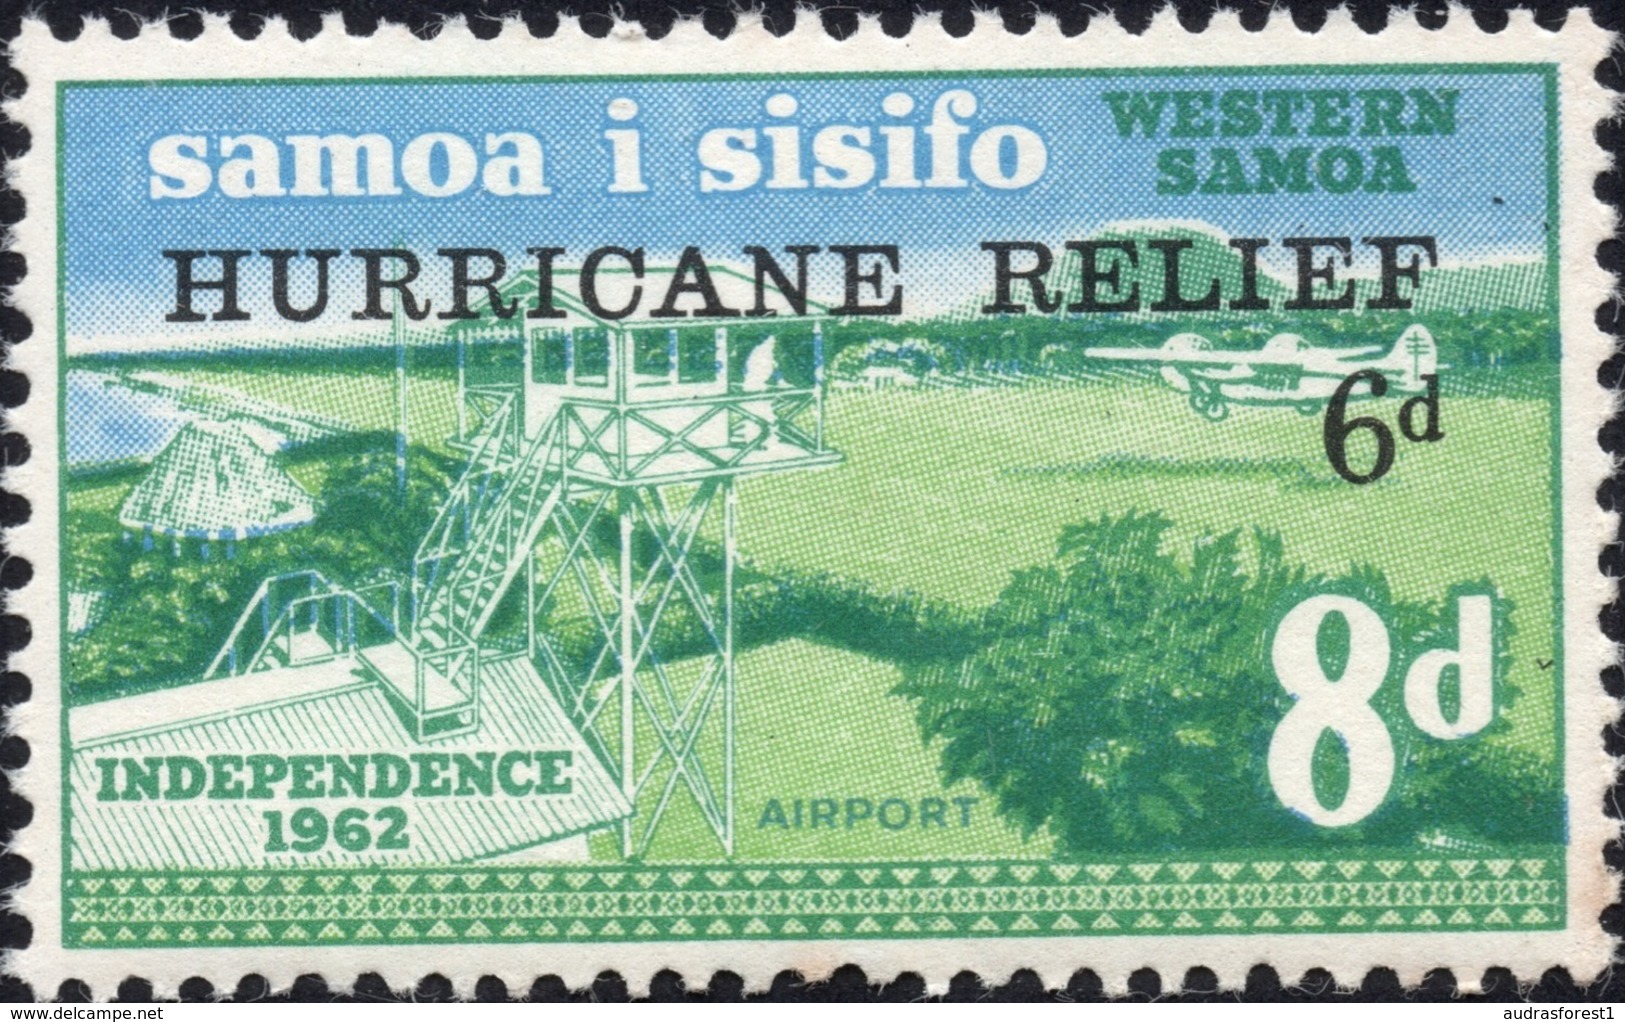 1966 Samoa I Sisifo Overprinted HURRICANE RELIEF 6d On 8d Mint Not Hinged Stamp Scott Cat No. B1 - Samoa